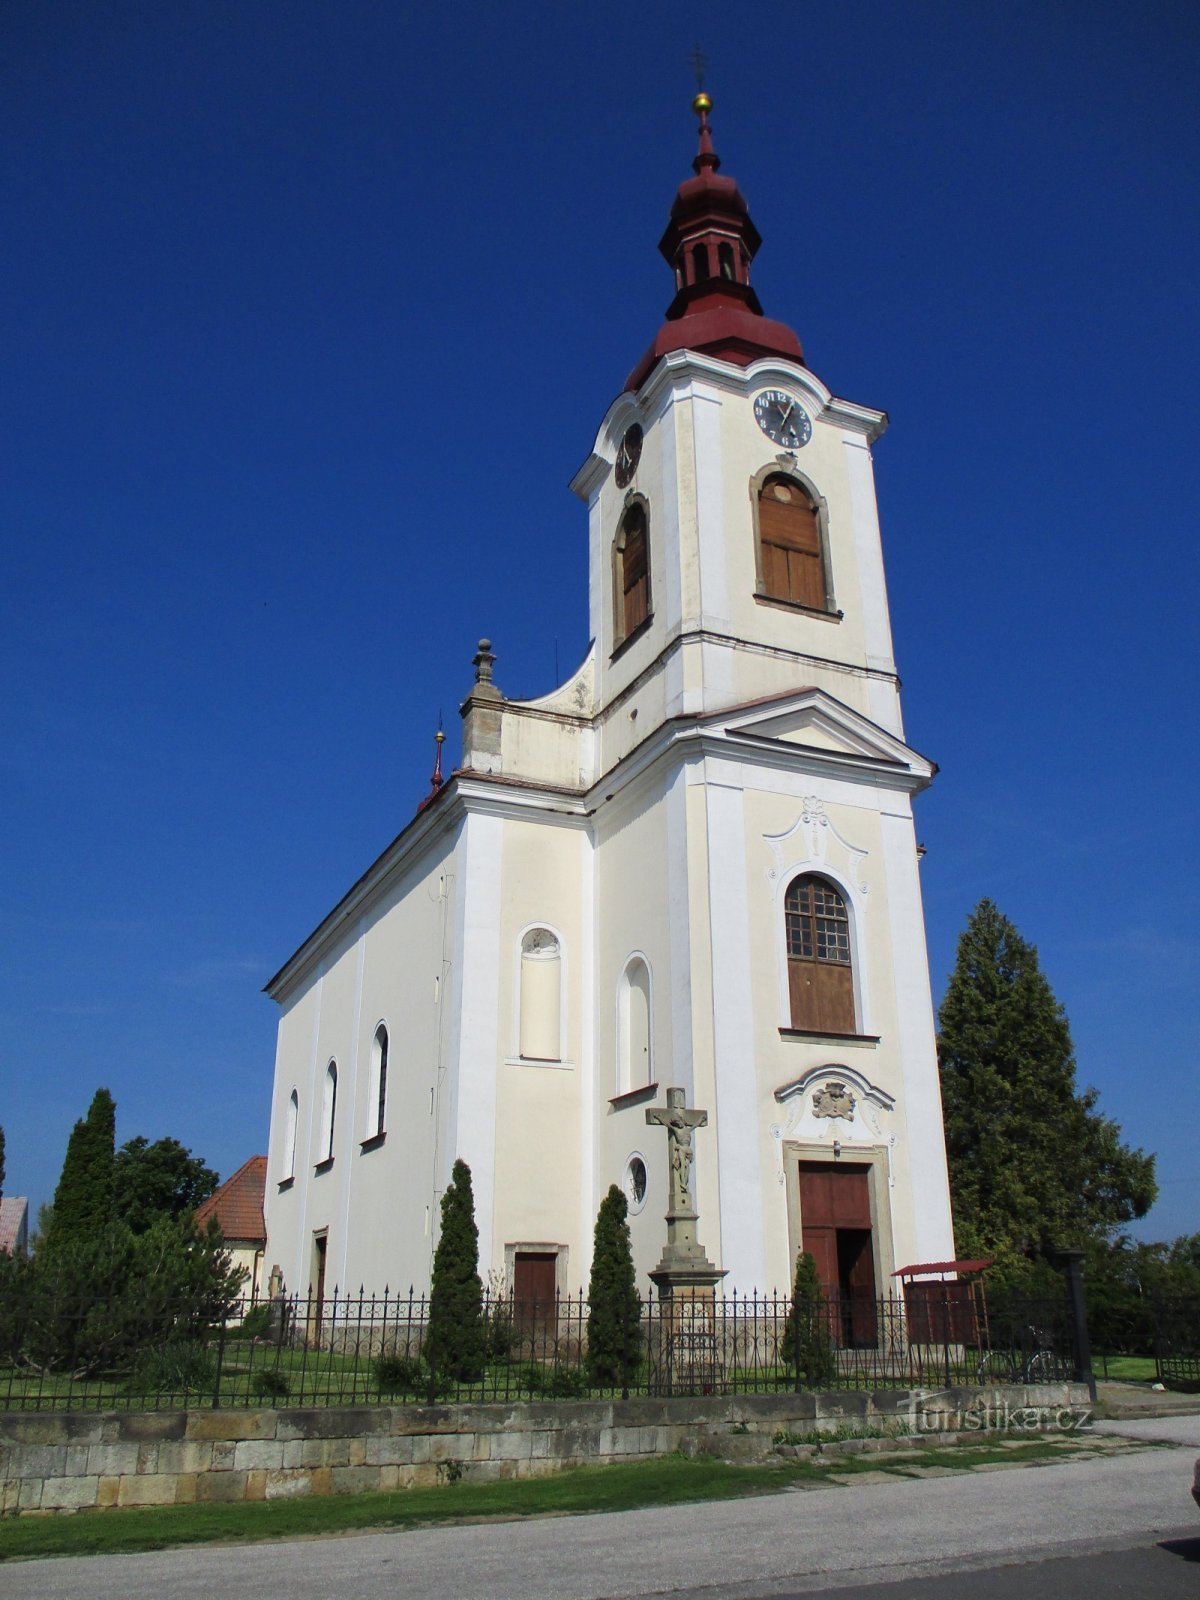 Chiesa di S. Caterina, vergini e martiri (České Meziříčí)